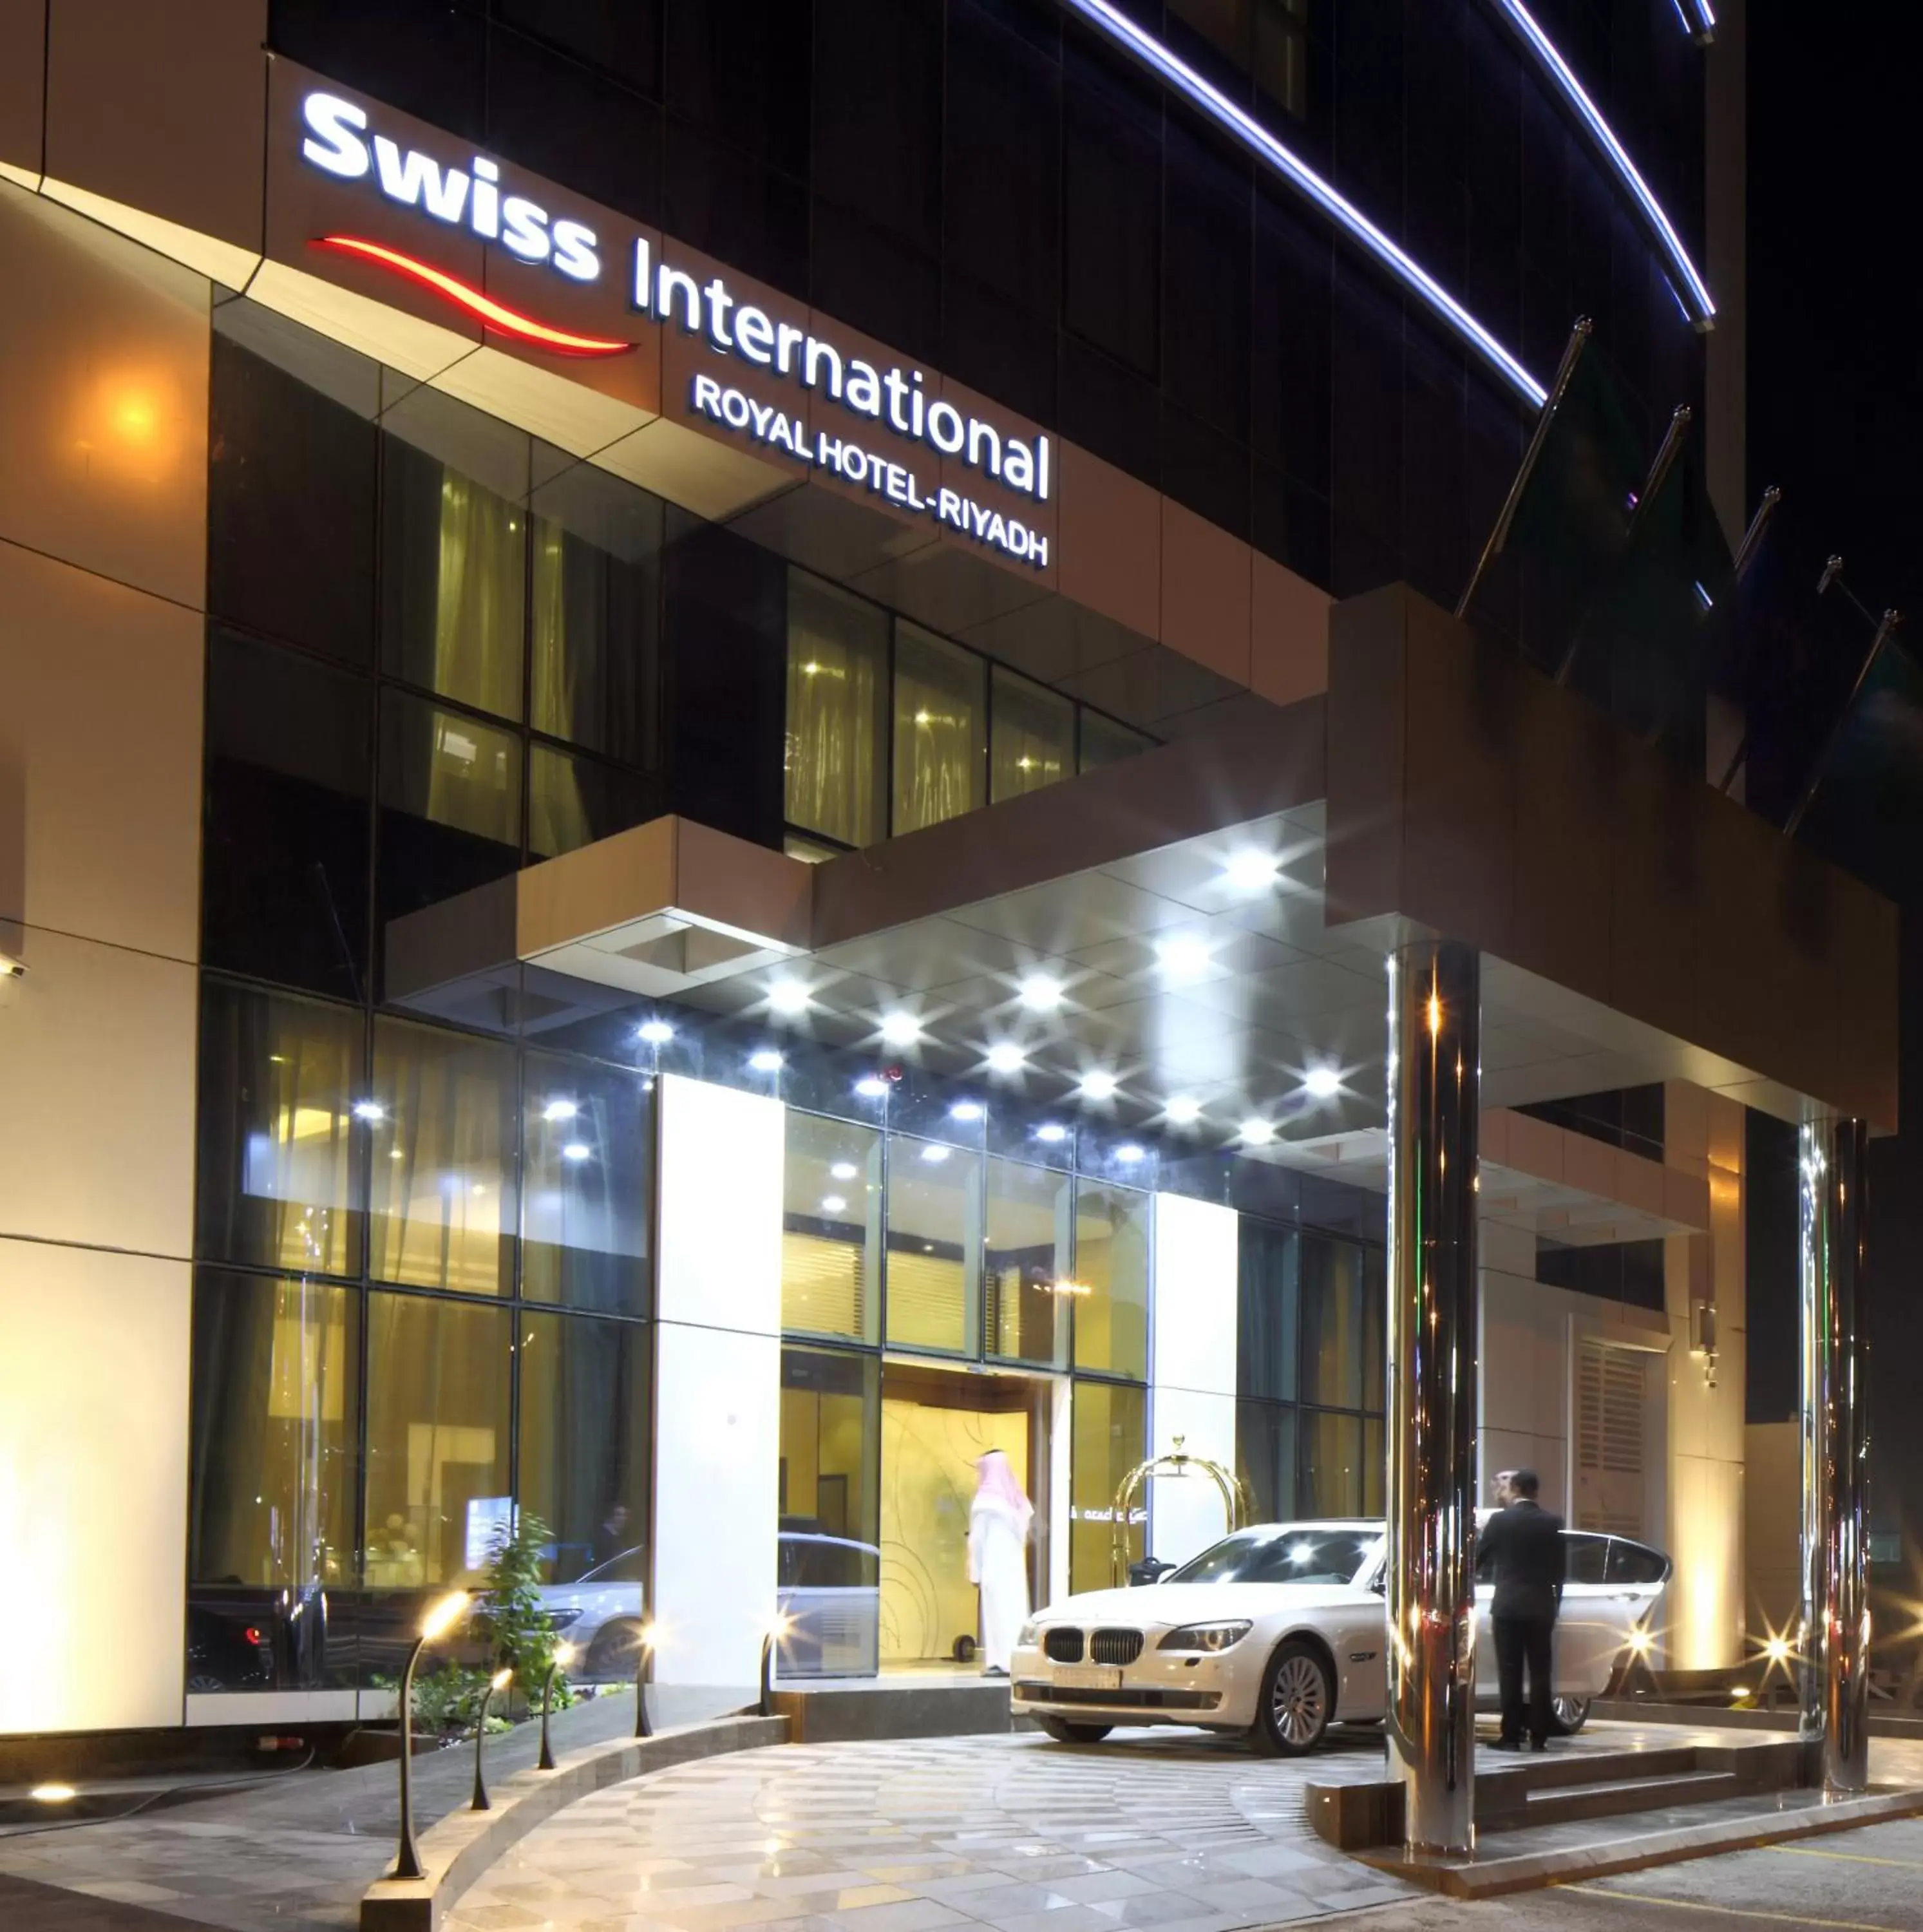 Business facilities, Property Building in Swiss International Royal Hotel Riyadh